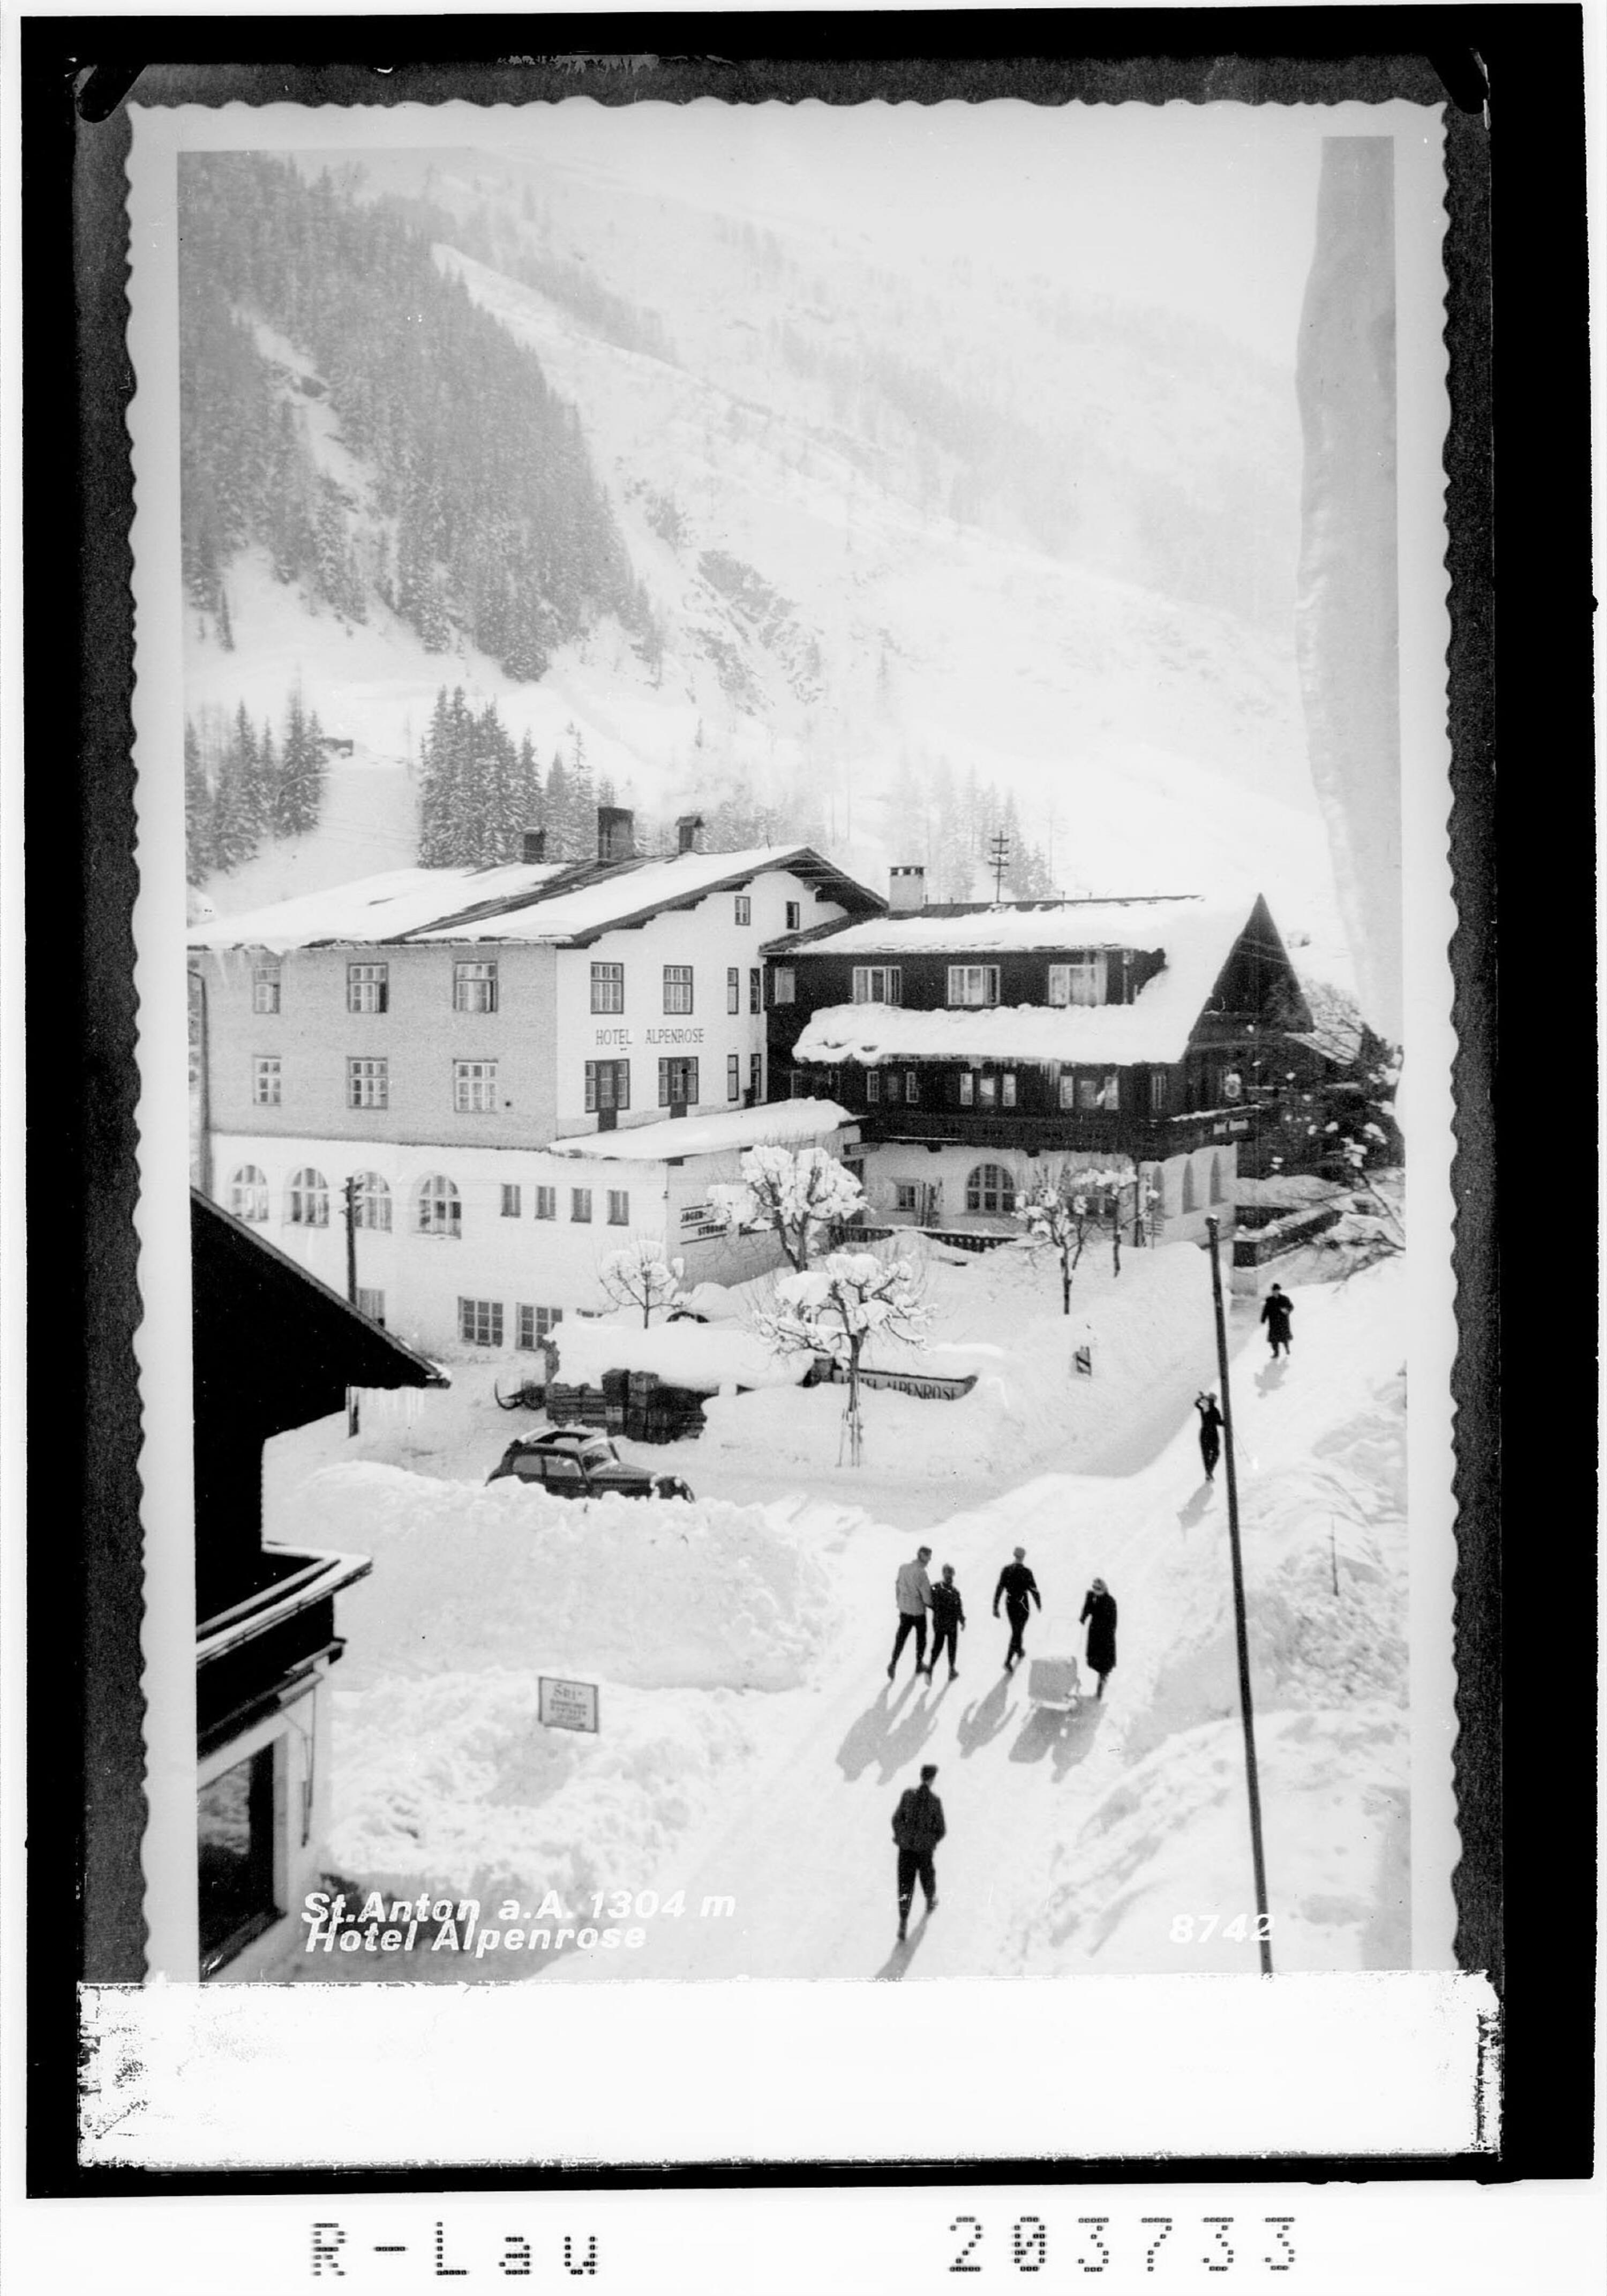 St.Anton am Arlberg 1304 m Hotel Alpenrose></div>


    <hr>
    <div class=